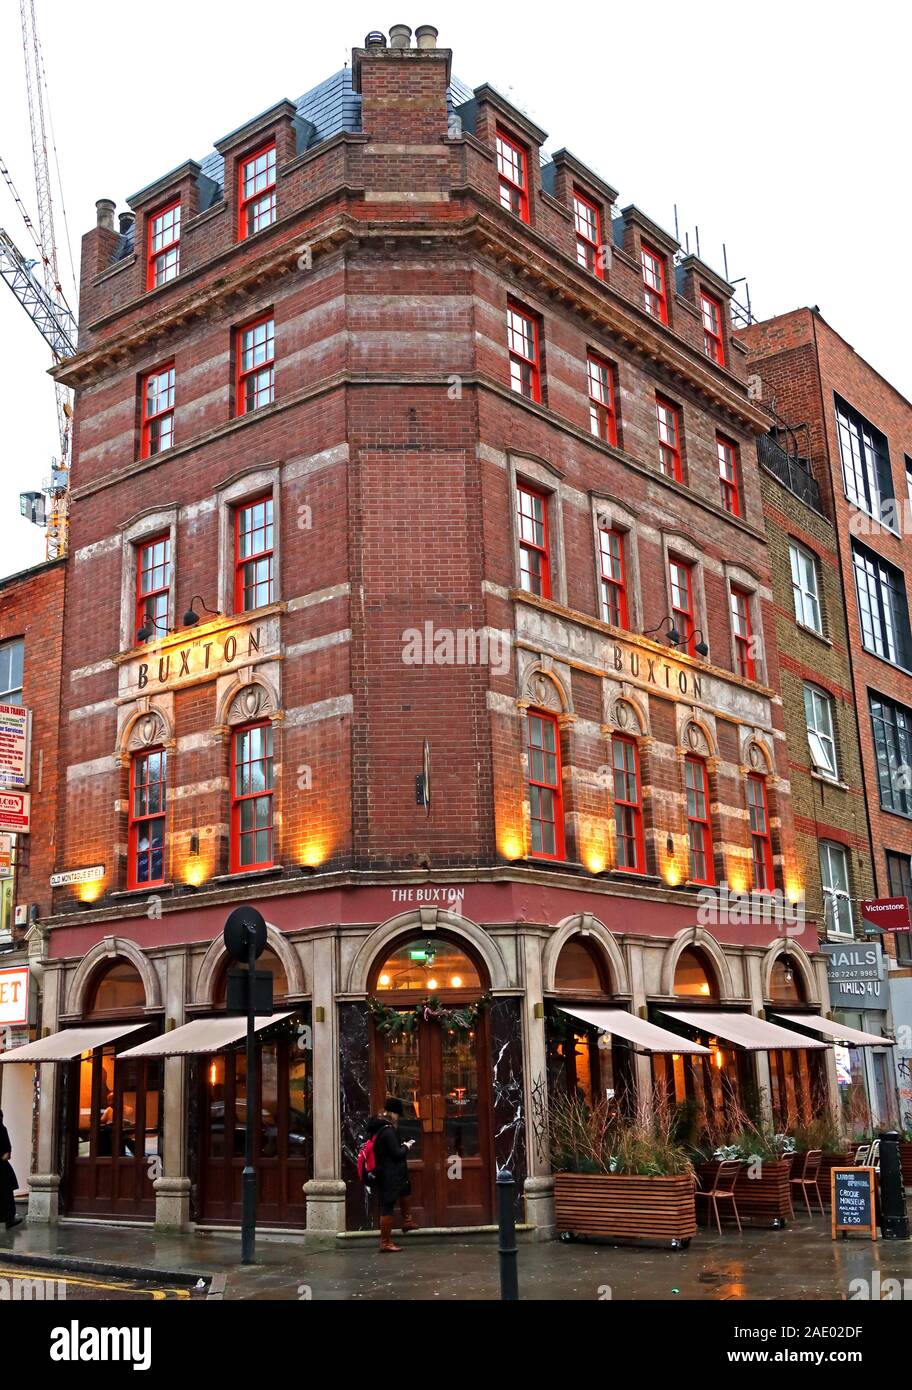 The Sir Thomas Buxton pub and hotel, Brick Lane,42 Osborn Street, London E1 6TD Stock Photo